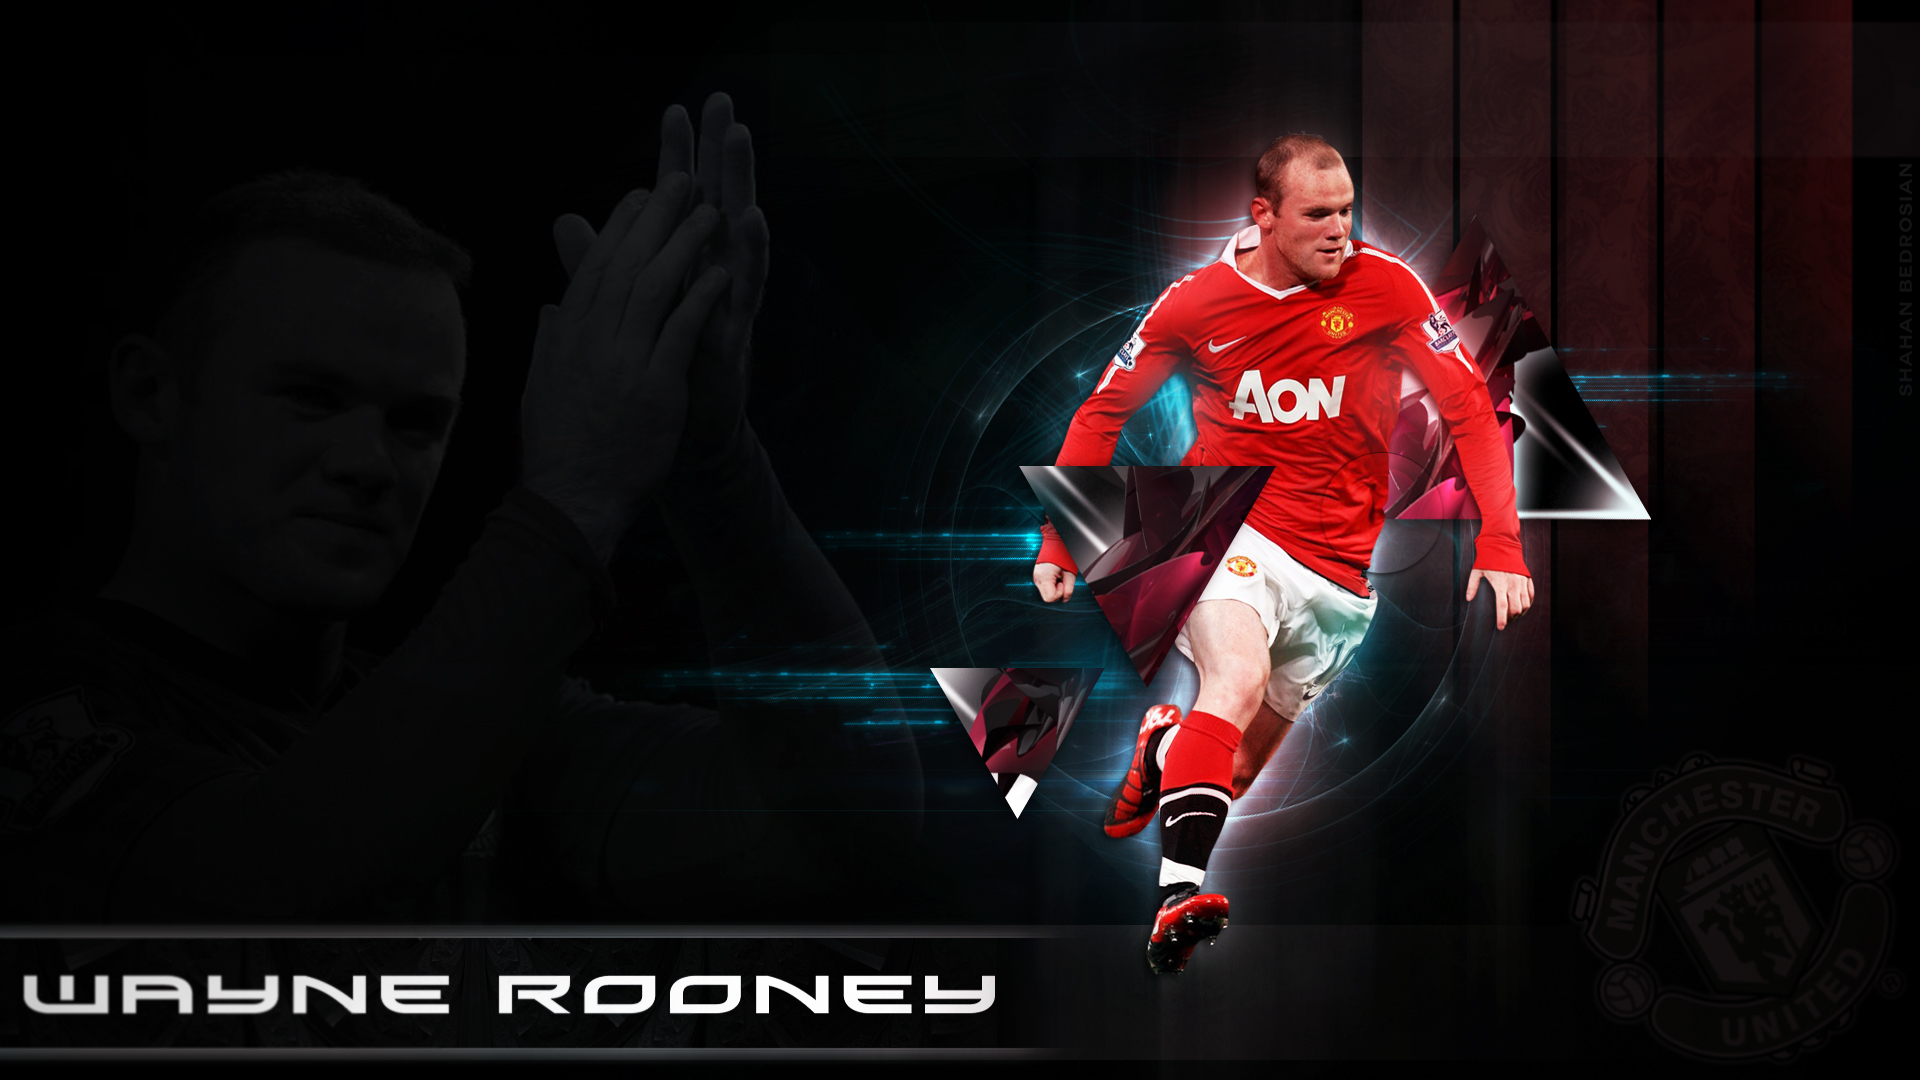 HD Legend Background Of Wayne Rooney Wallpaper